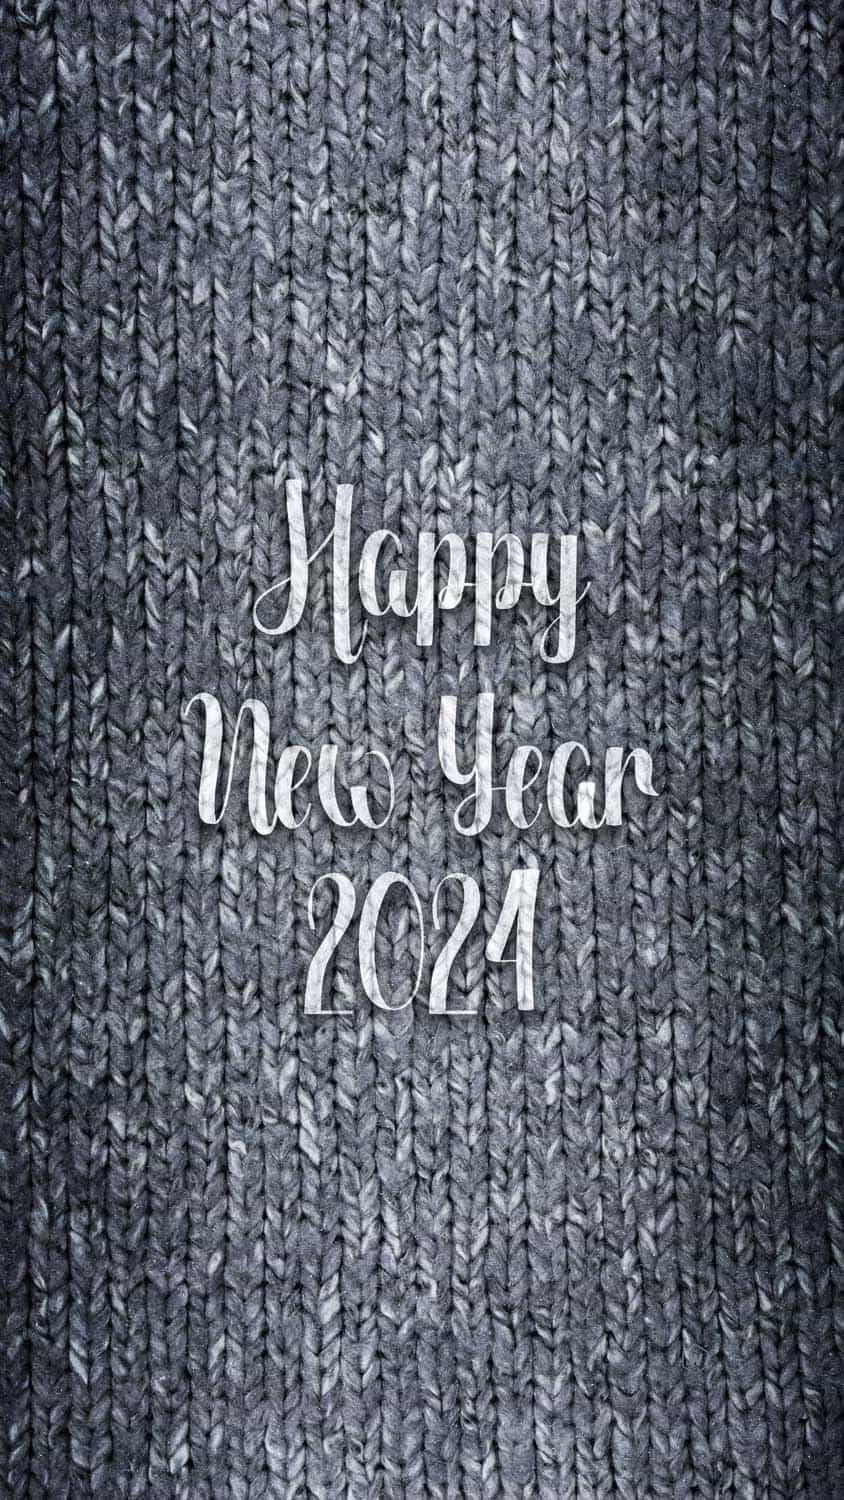 Happy New Year 2024 Winter iPhone Wallpaper